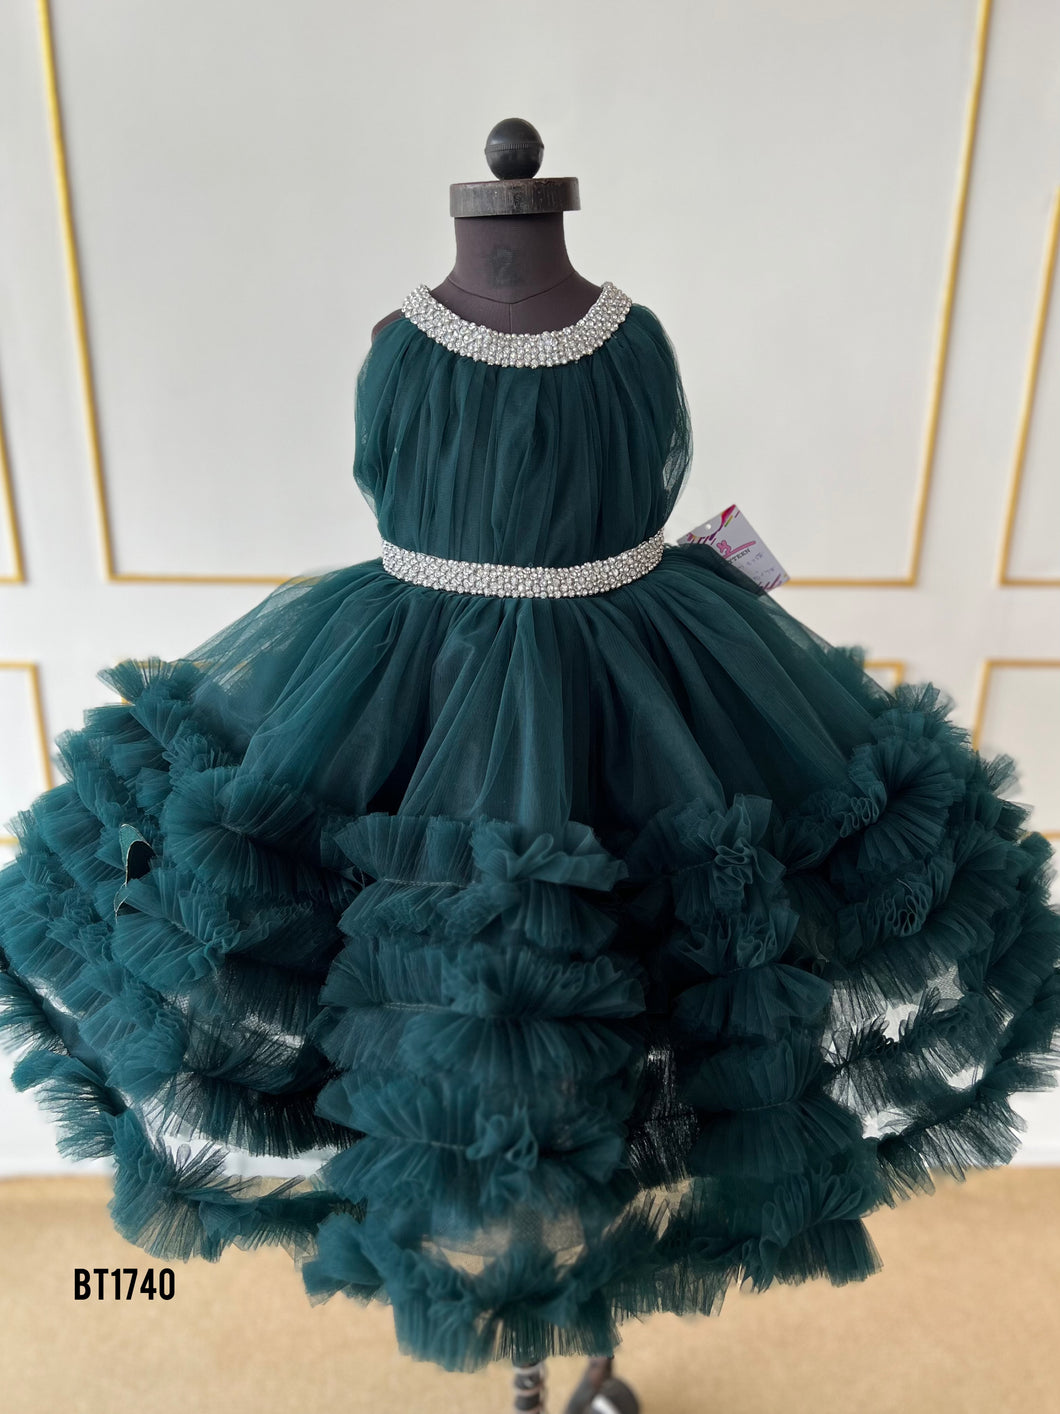 BT1740 Midnight Sapphire Soirée Gown - A Regal Affair for Tiny Tots